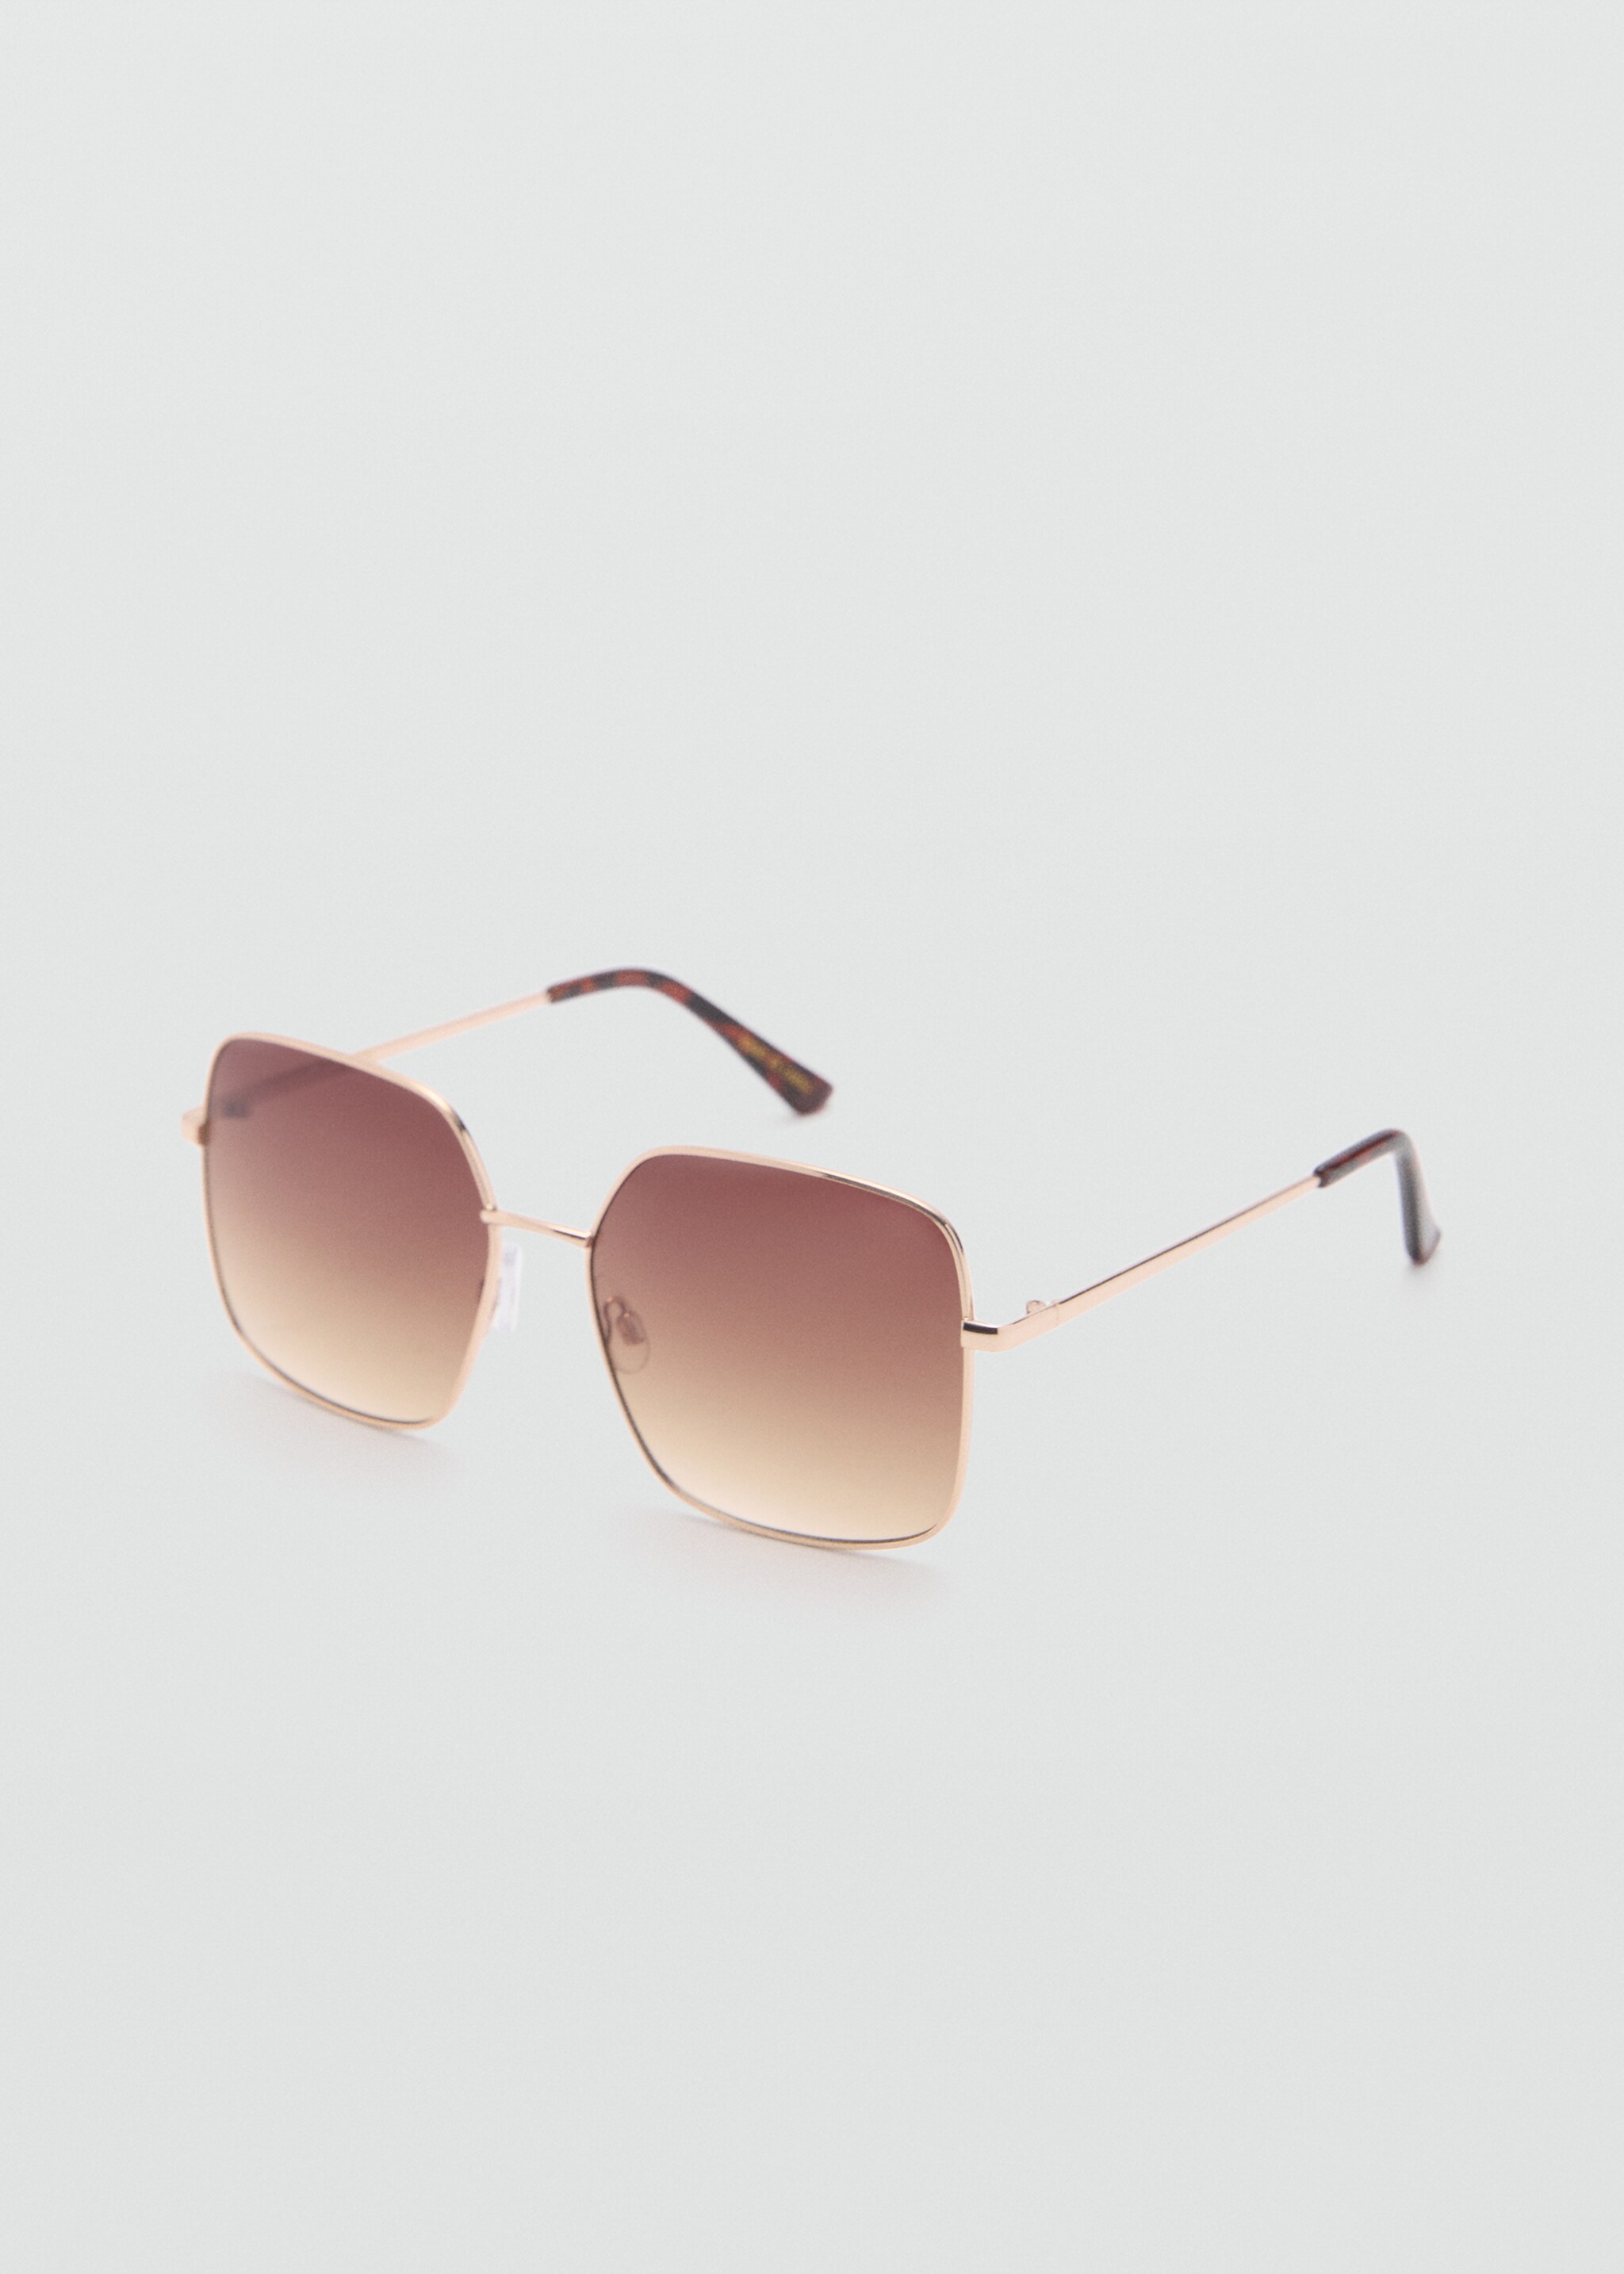 Metallic frame sunglasses - Medium plane